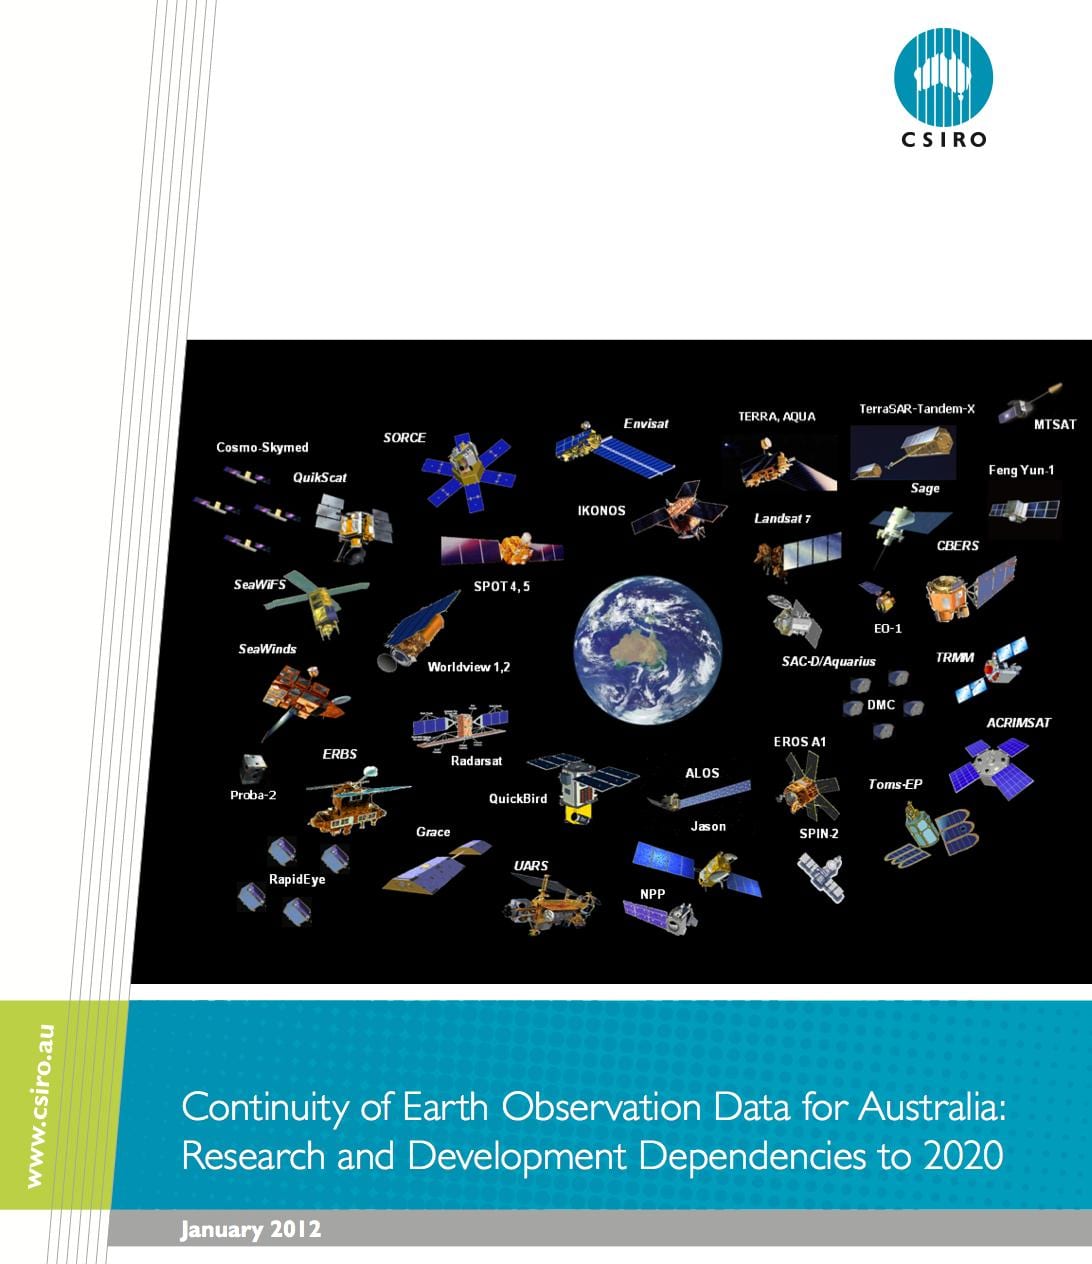 A screenshot of the CEODA-R&D Cover. Image Source: CSIRO